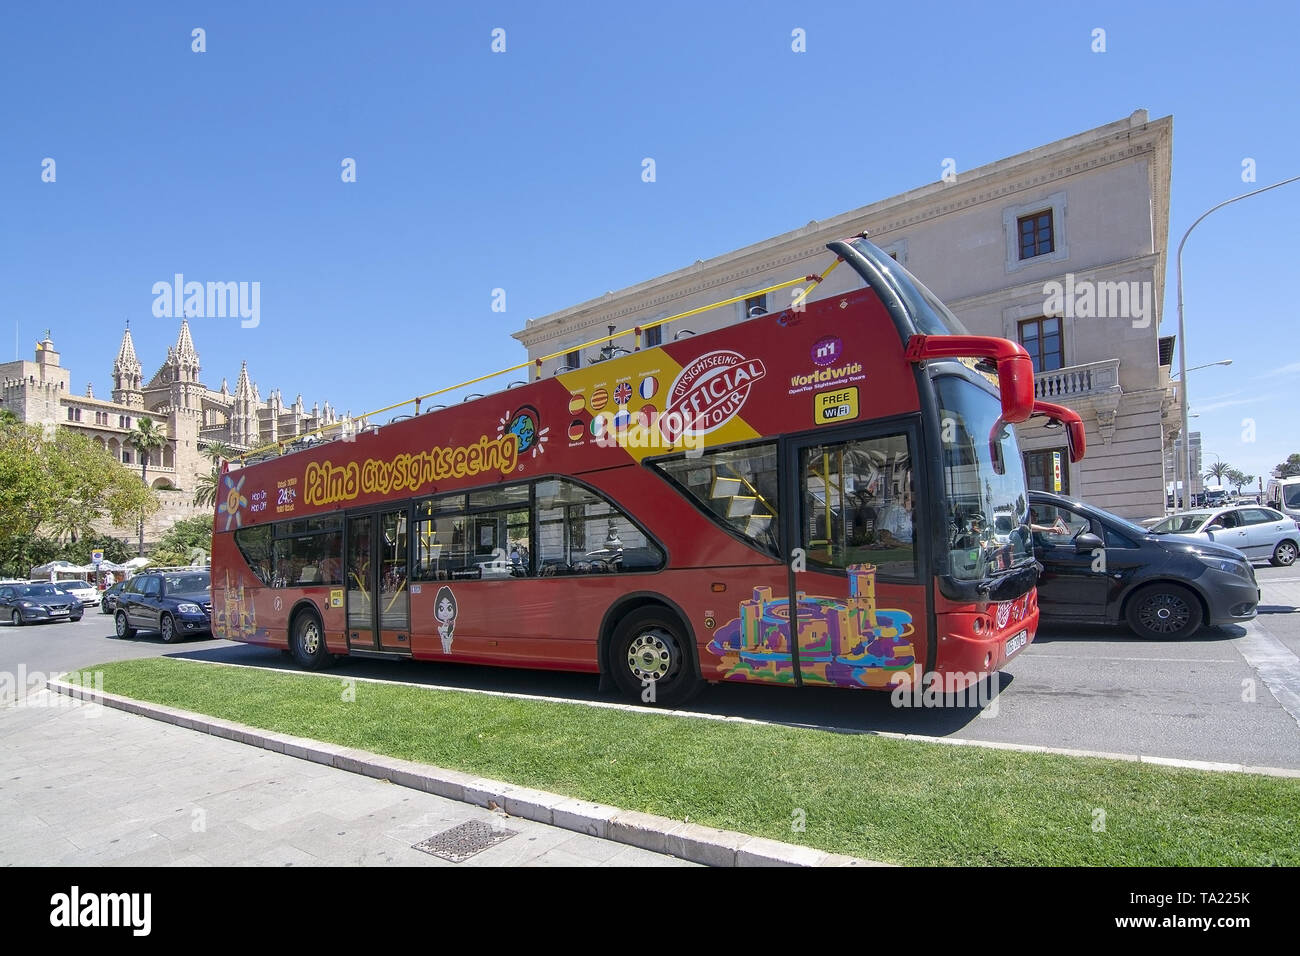 PALMA, MALLORCA, SPAIN - MAY 20, 2019: Hop on hop off tour bus and cathedral  on May 20, 2019 in Palma, Mallorca, Spain. Stock Photo